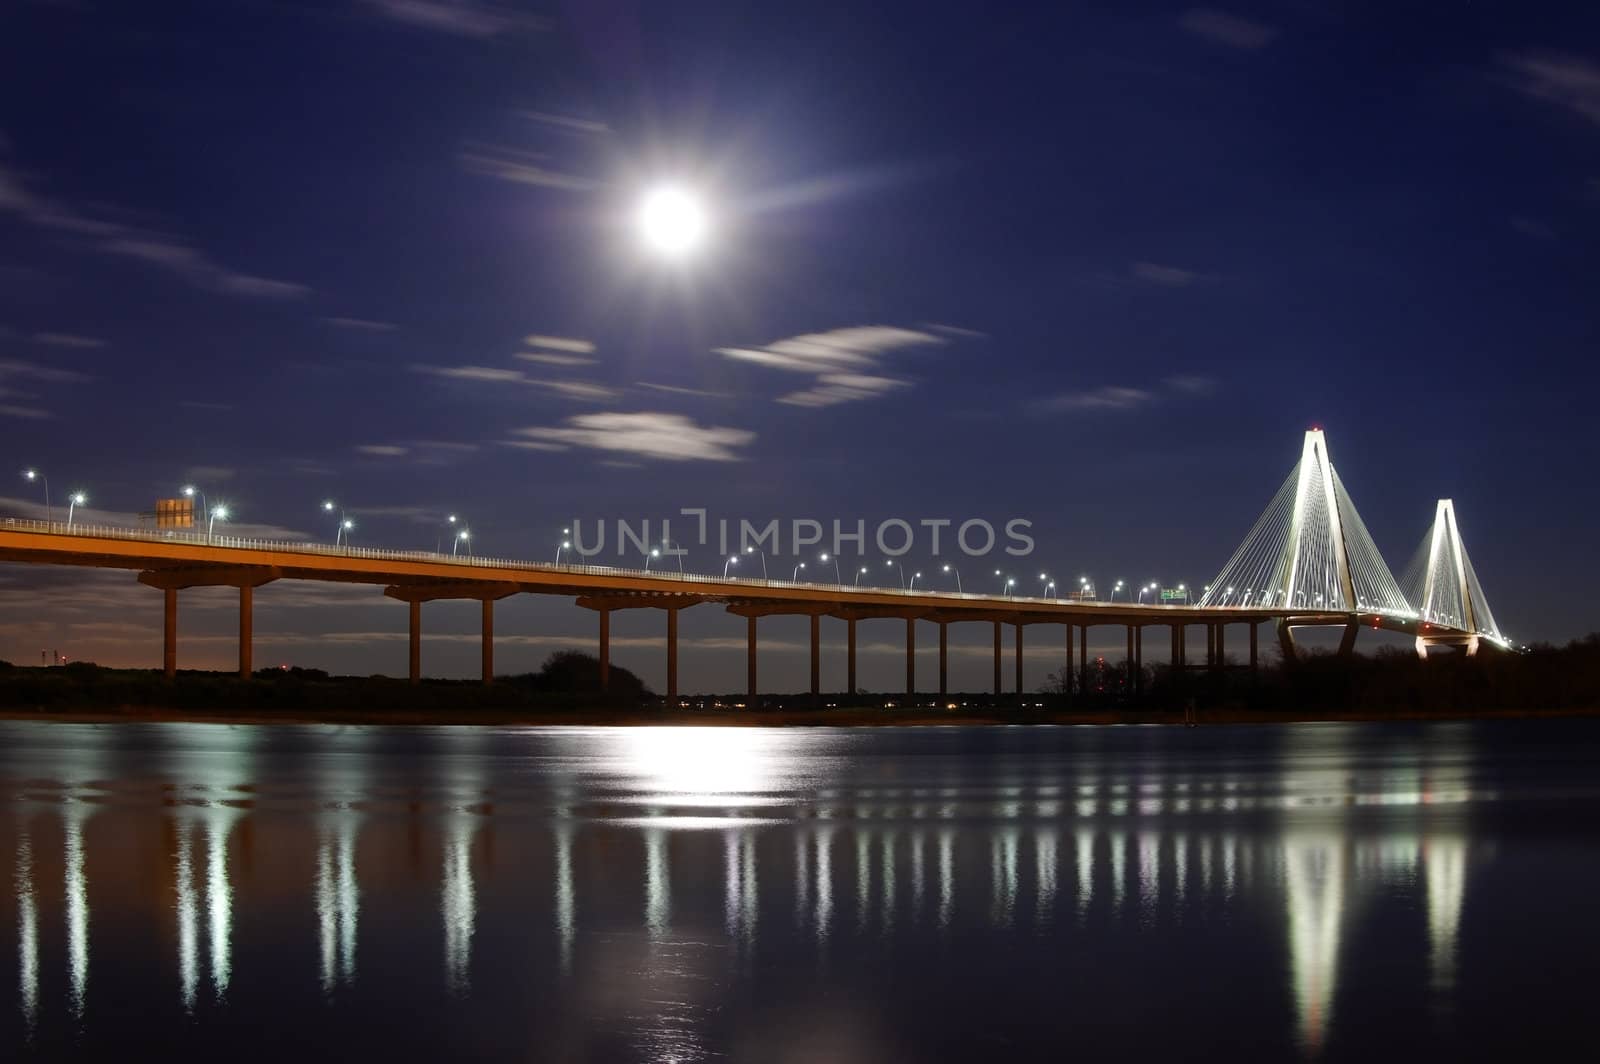 Full moon over the Ravenel Bridge